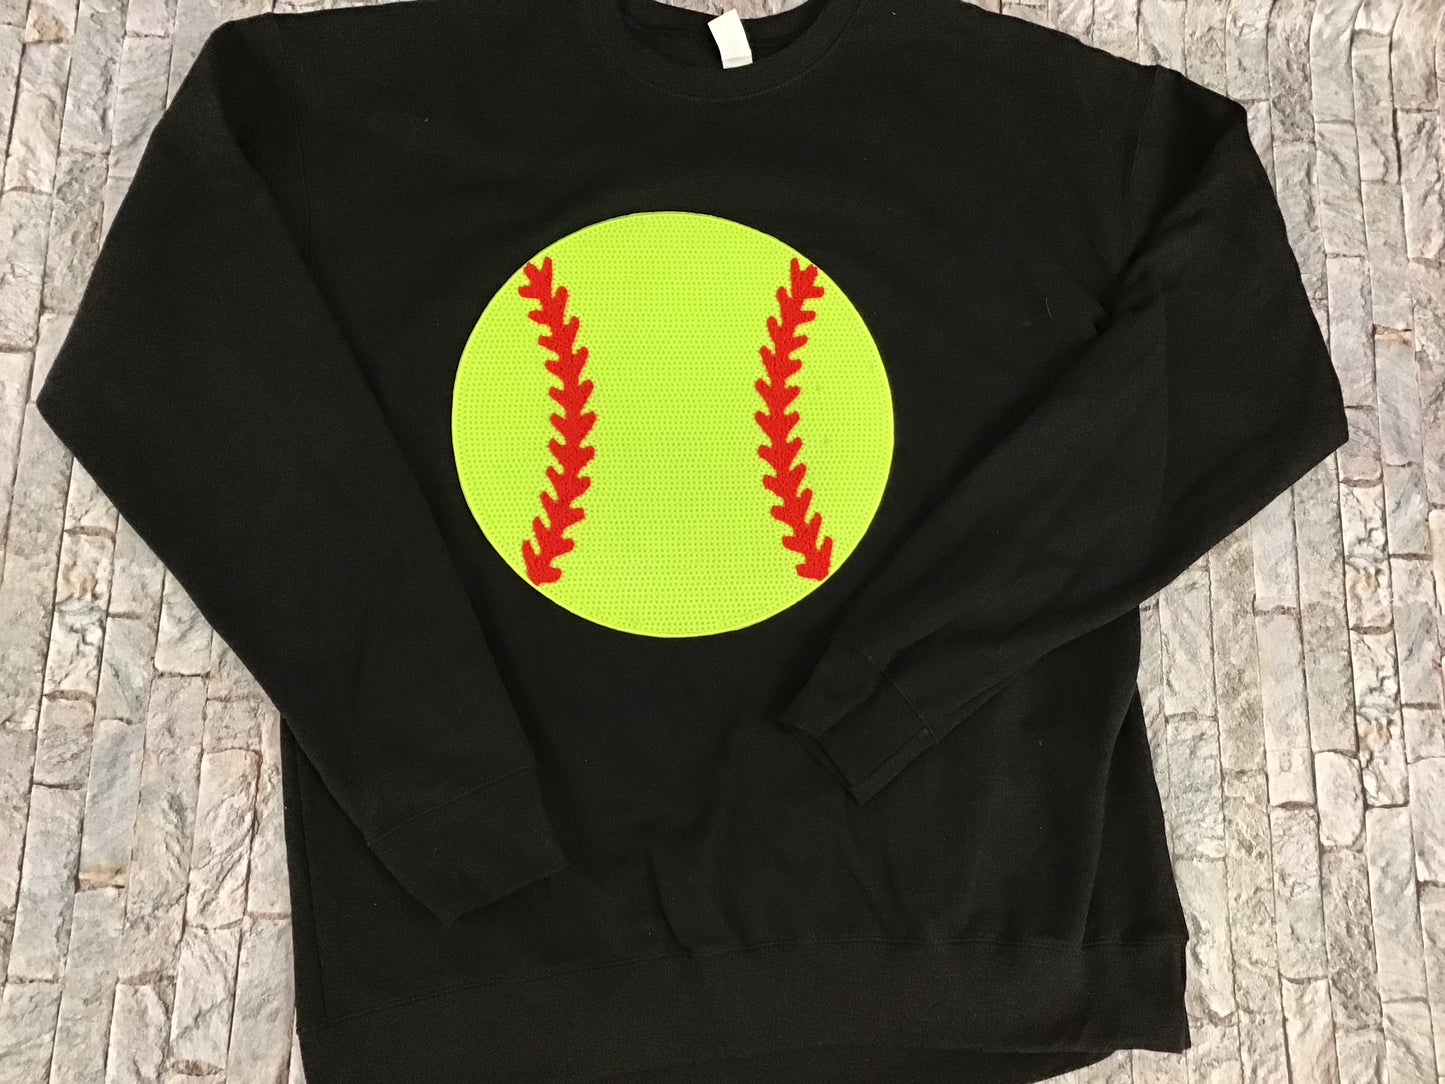 Sequin softball patch sweatshirt